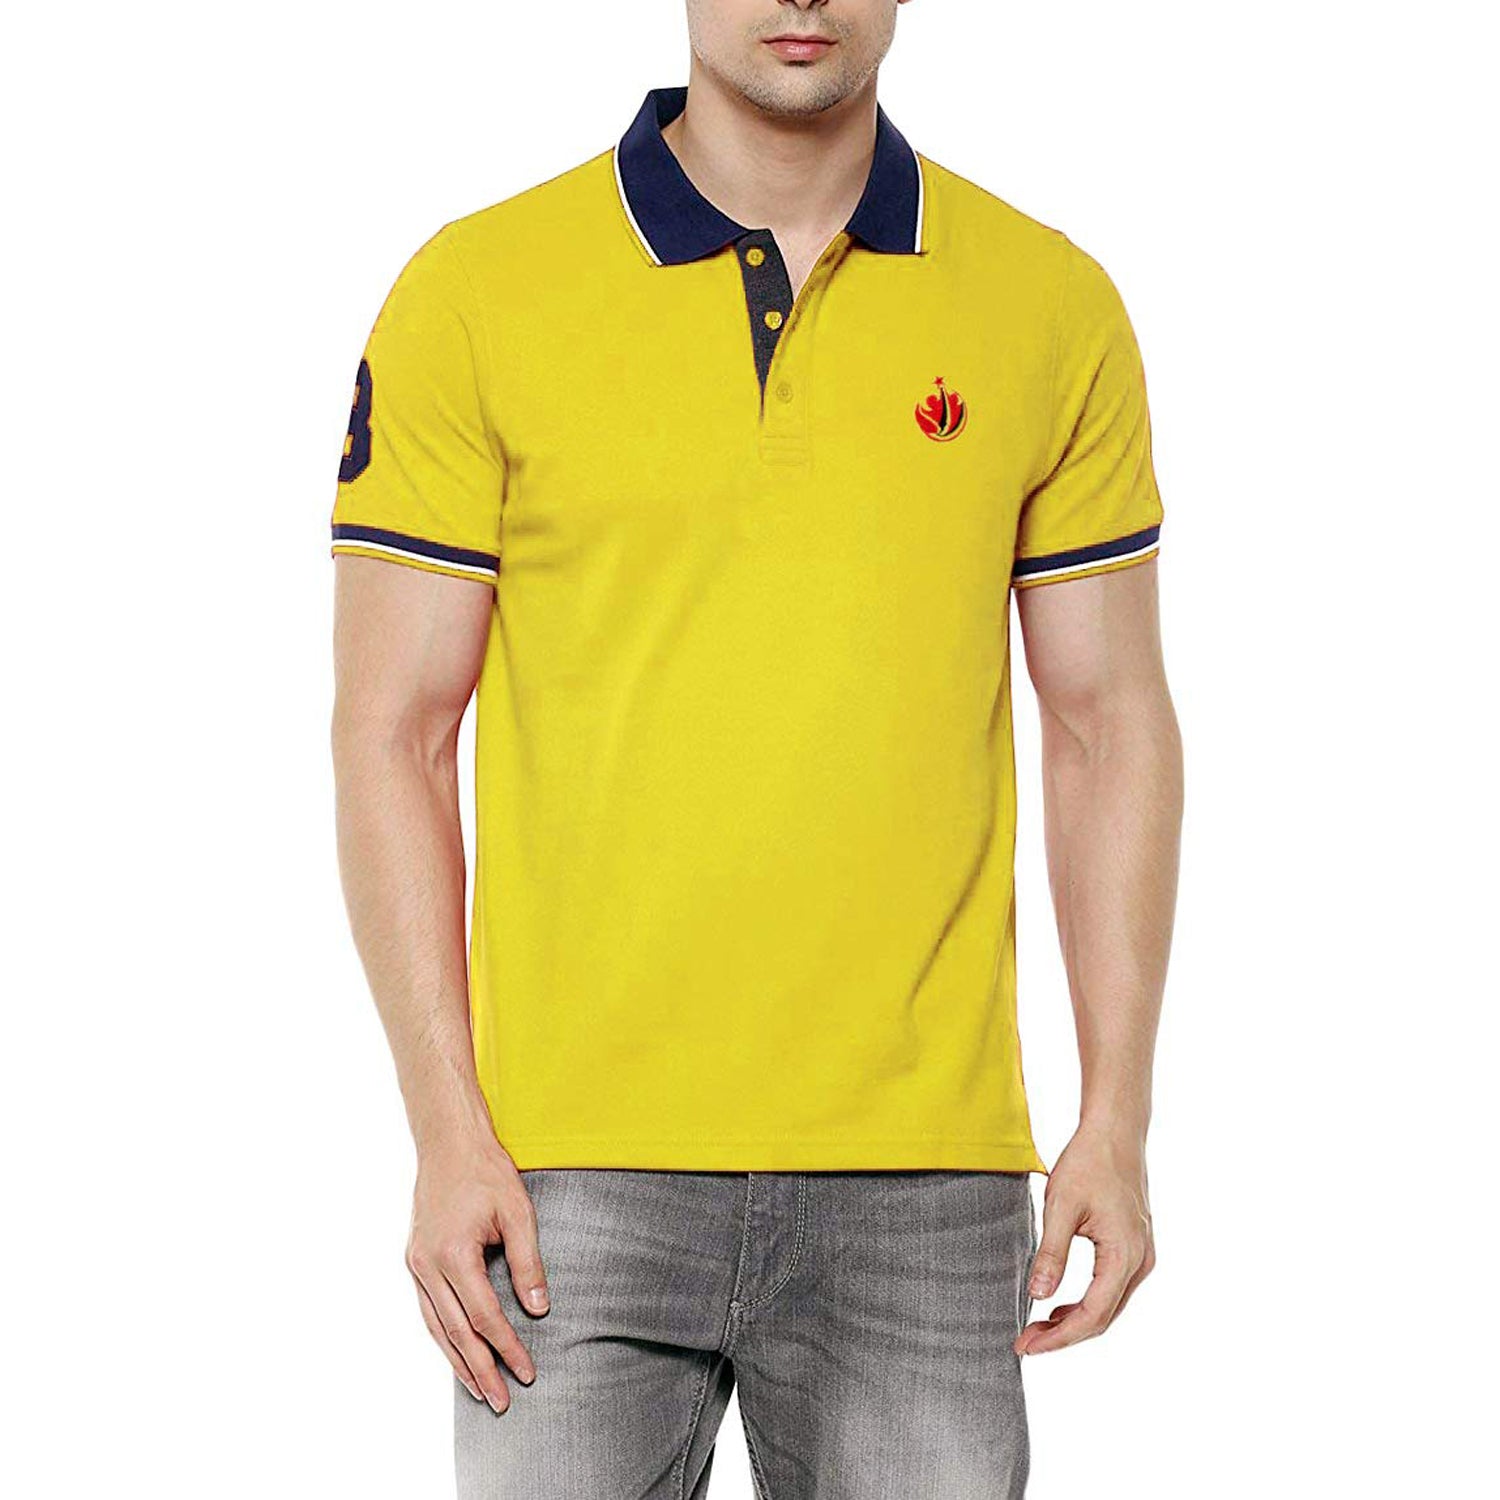 Prokick Men's Polo T-Shirt, Yellow - Best Price online Prokicksports.com